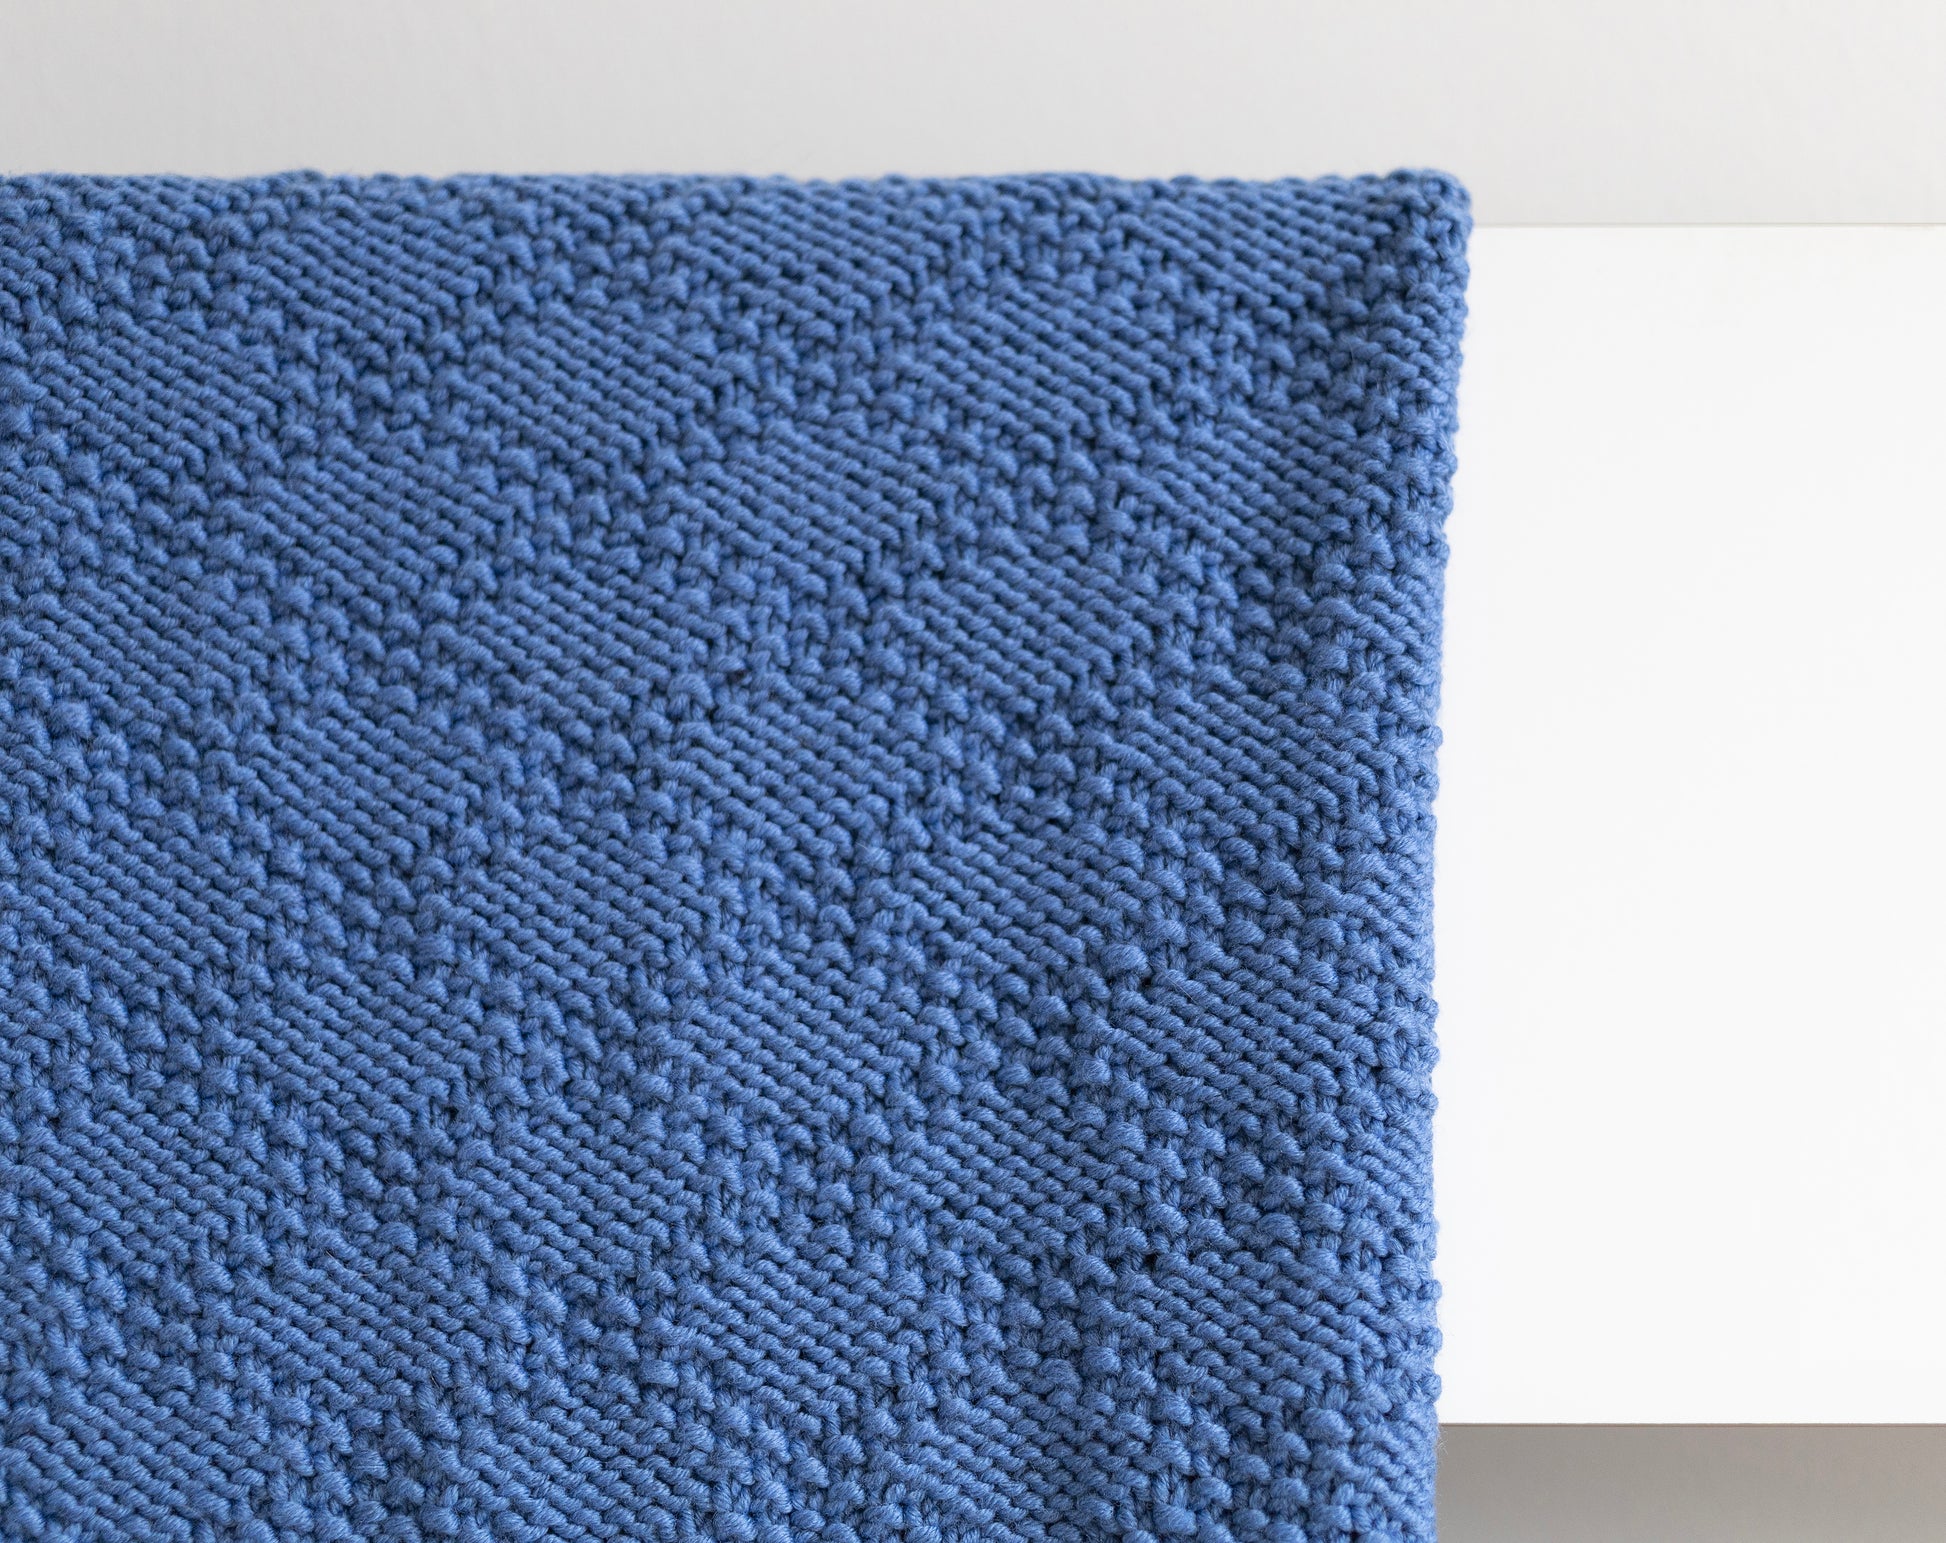 Blue merino wool hand-knitted blanket in Charles Brocade pattern wrong side